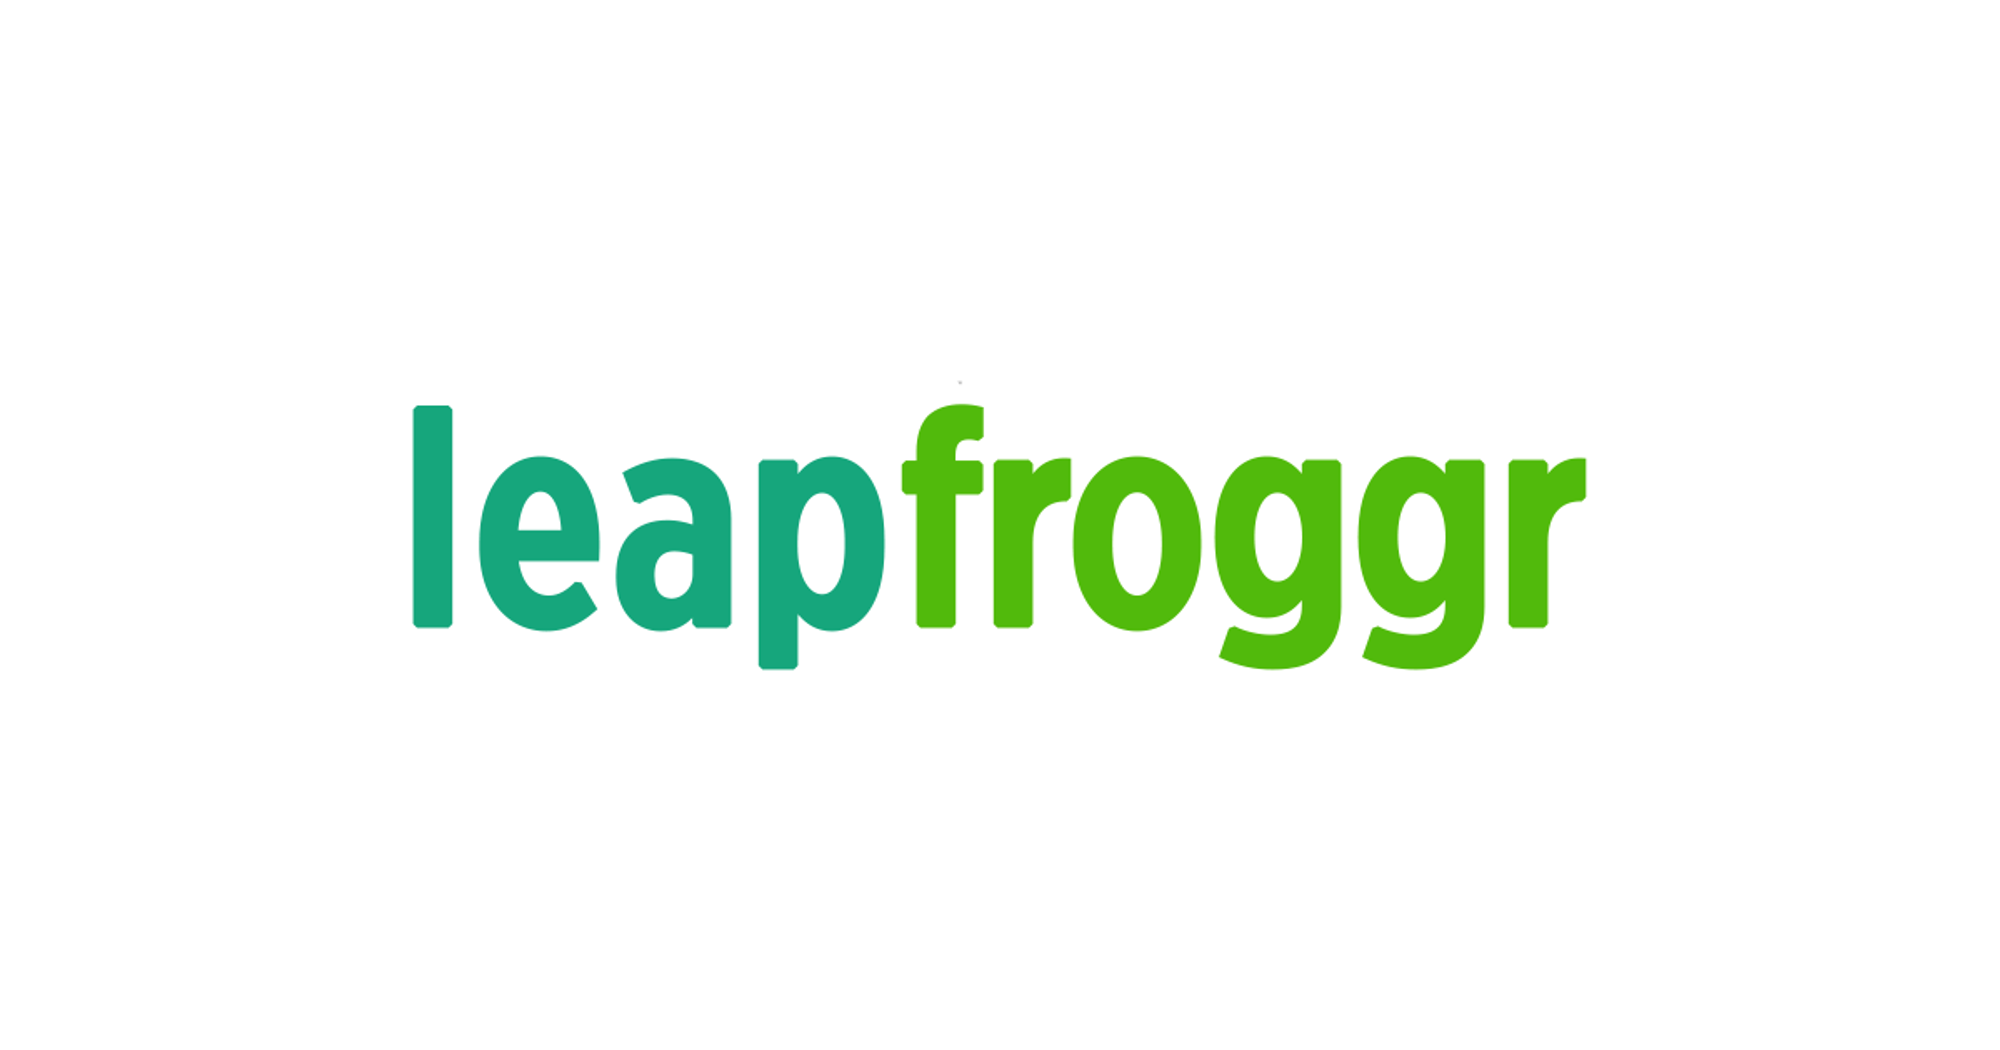 Registered Nurse at LeapFroggr Inc.